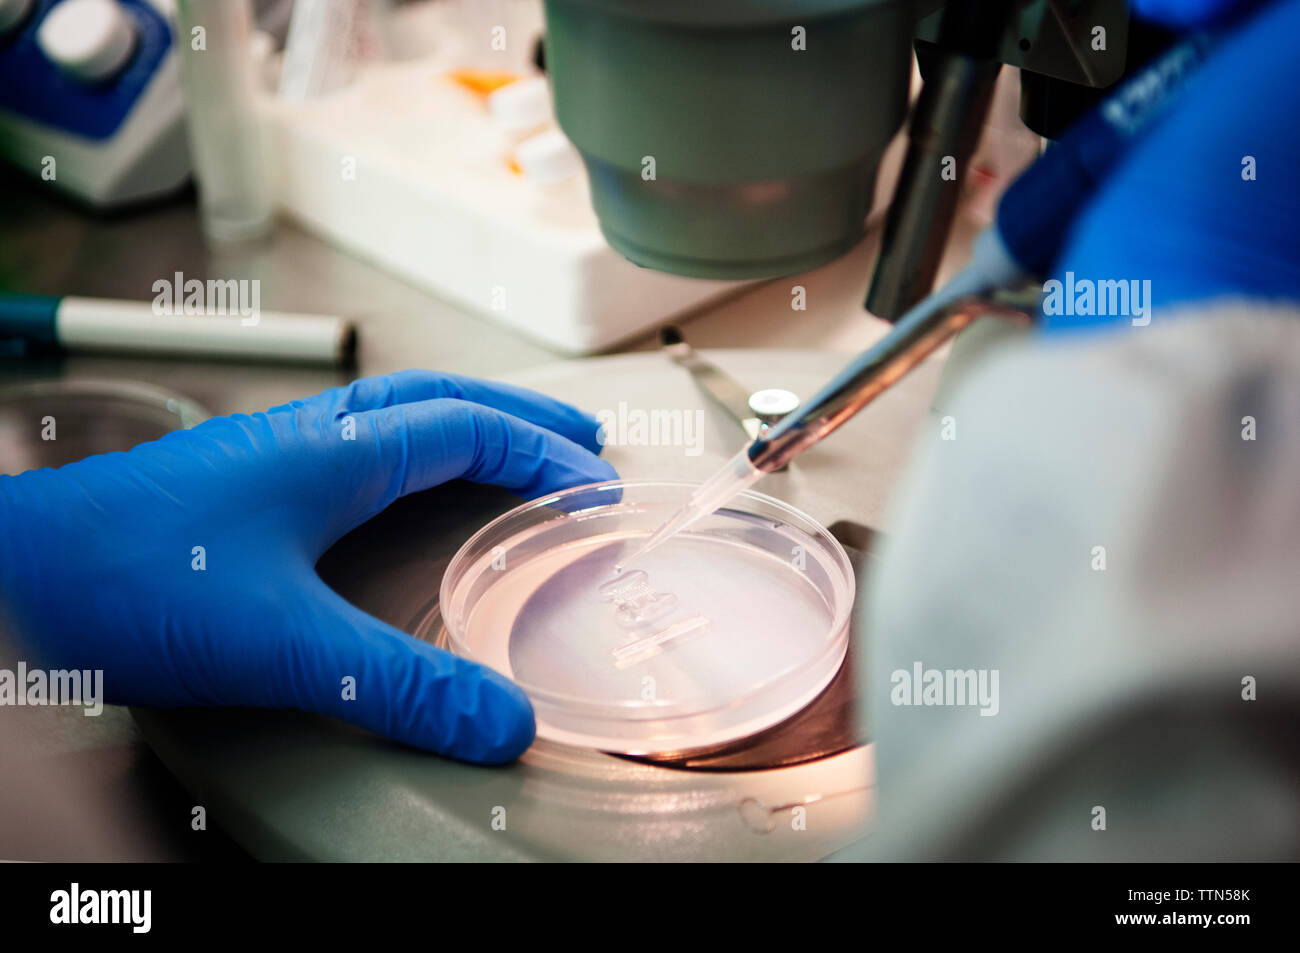 Scientist examining samples in petri dish under microscope at laboratory Stock Photo